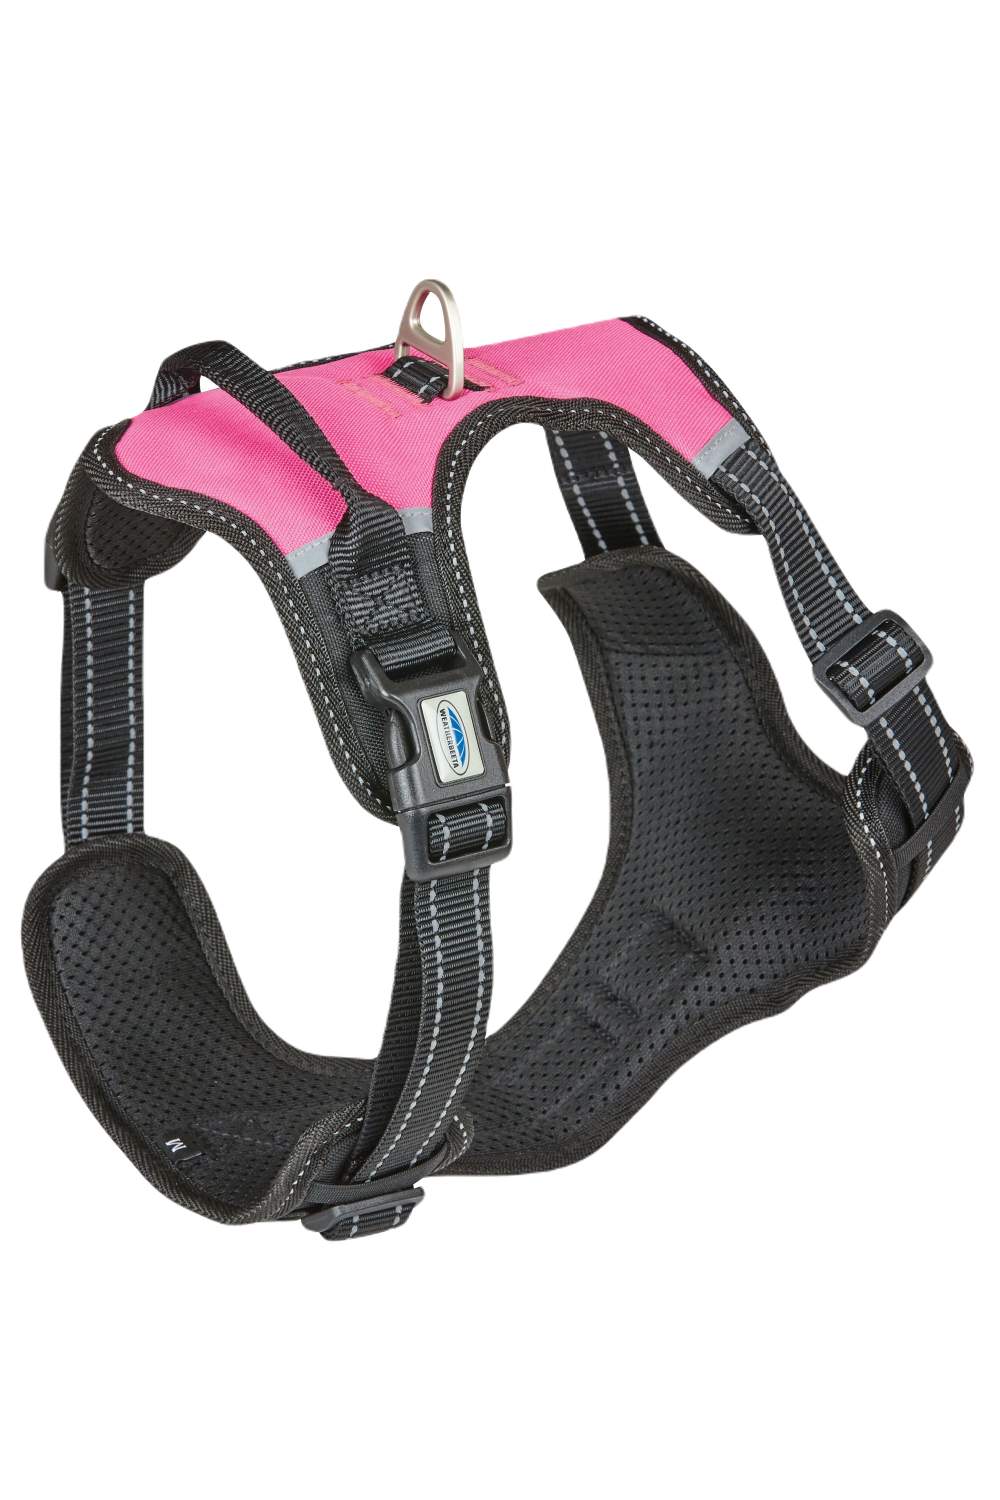 WeatherBeeta Anti Pull/Travel Harness In Black/Pink 